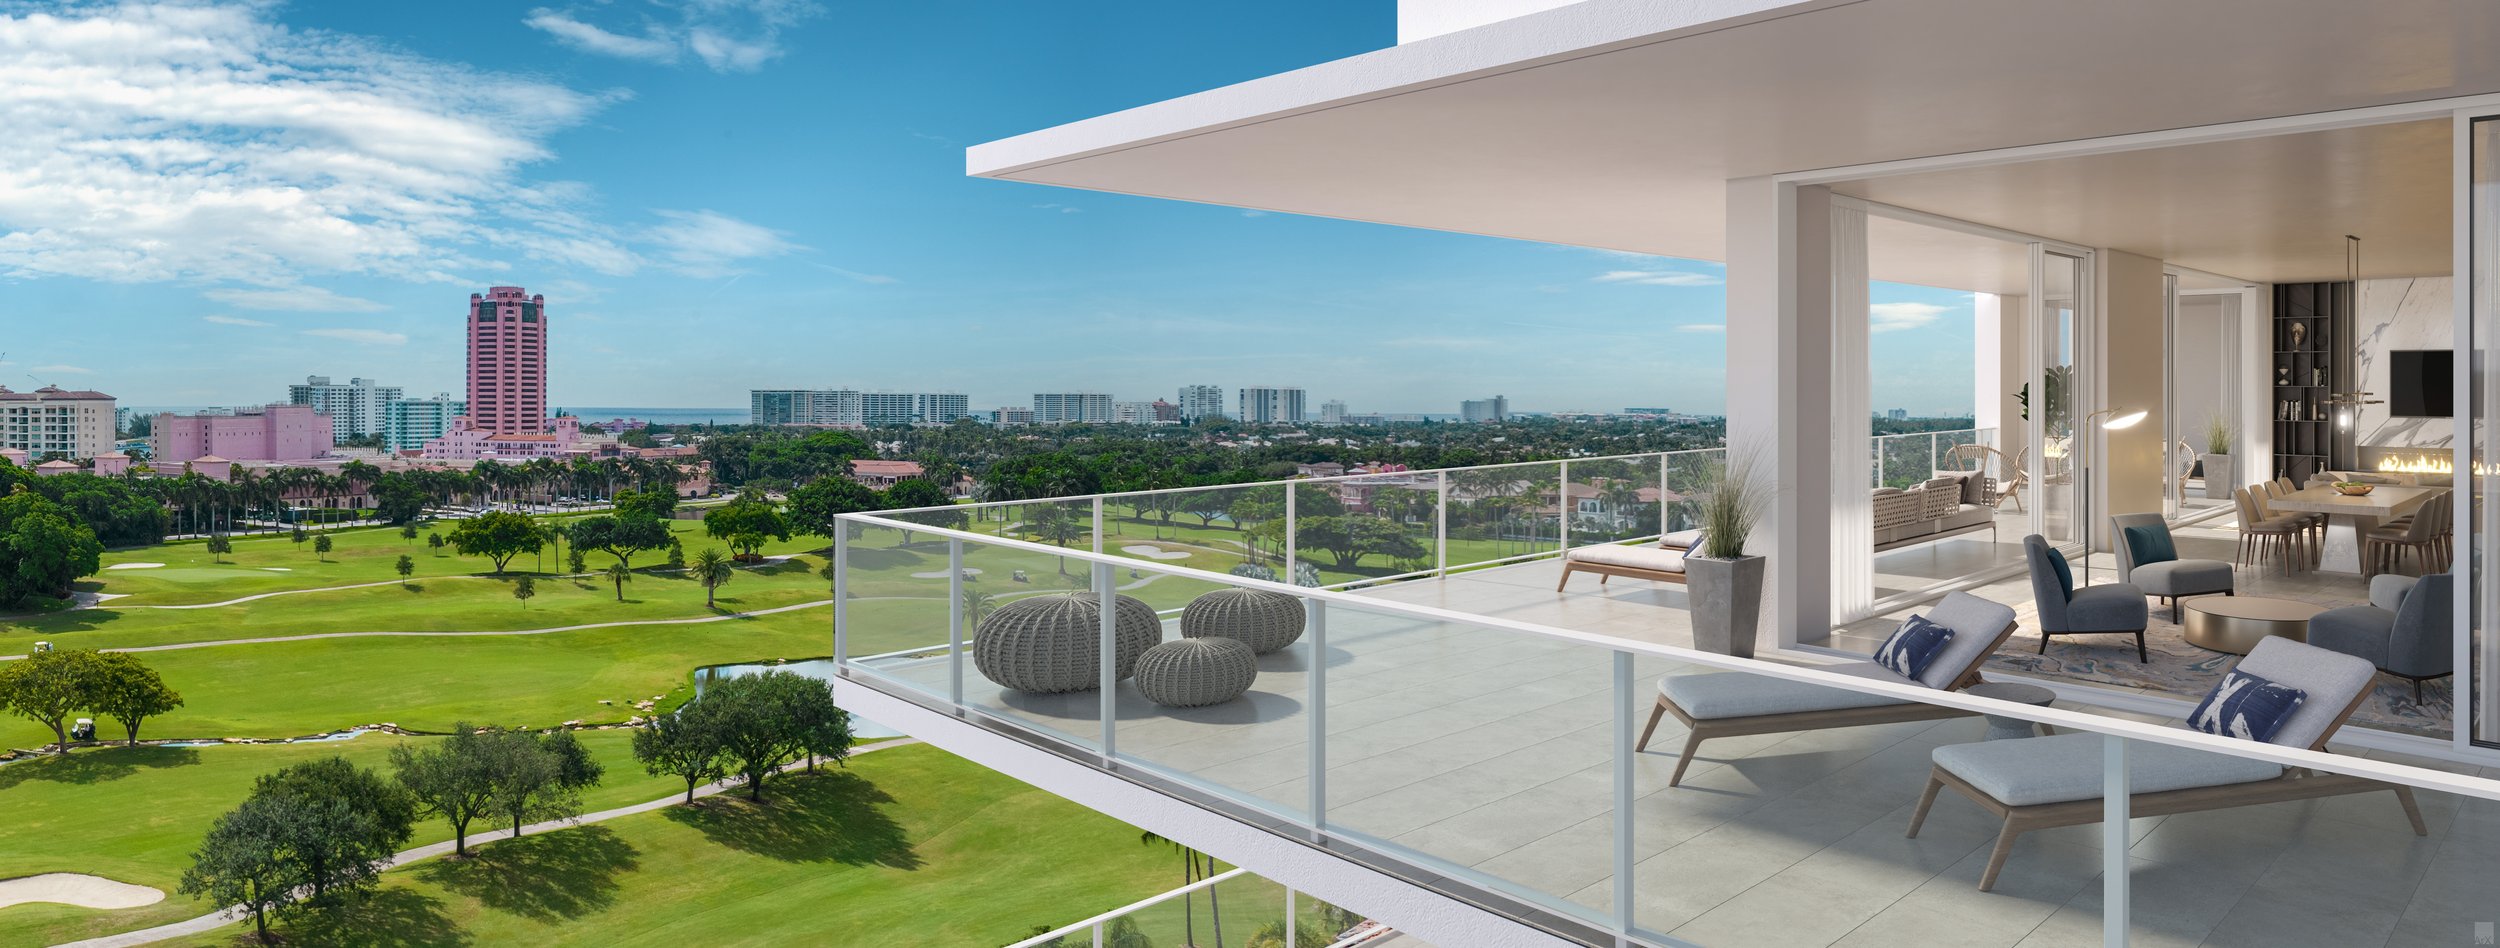 El-Ad National Properties Breaks Ground On ALINA Residences Phase Two In Boca Raton4.jpg